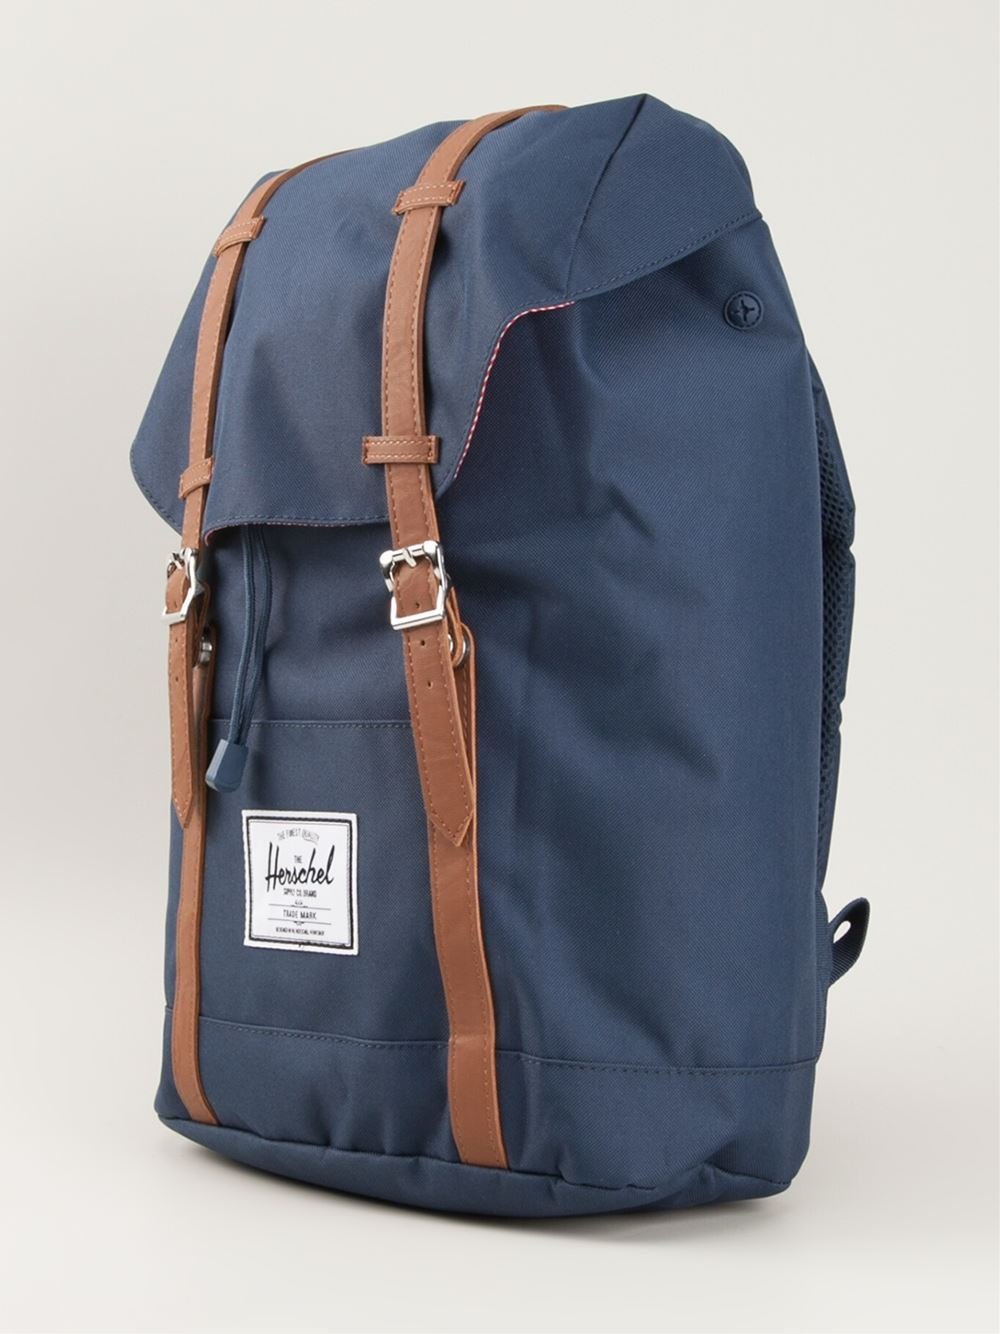 Lyst - Herschel Supply Co. 'Retreat' Backpack in Blue for Men